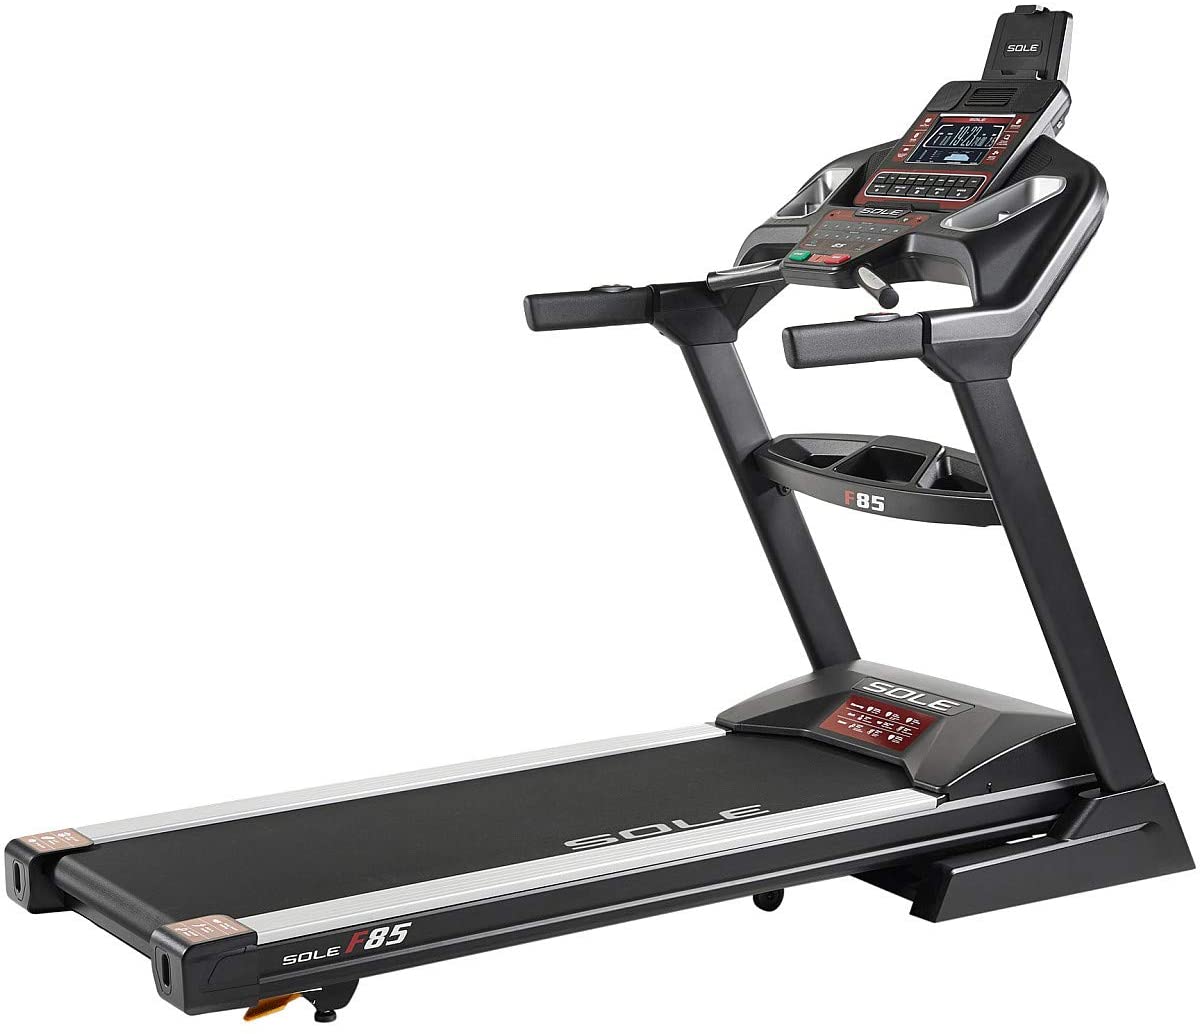 Sole F85 Treadmill Review 2020